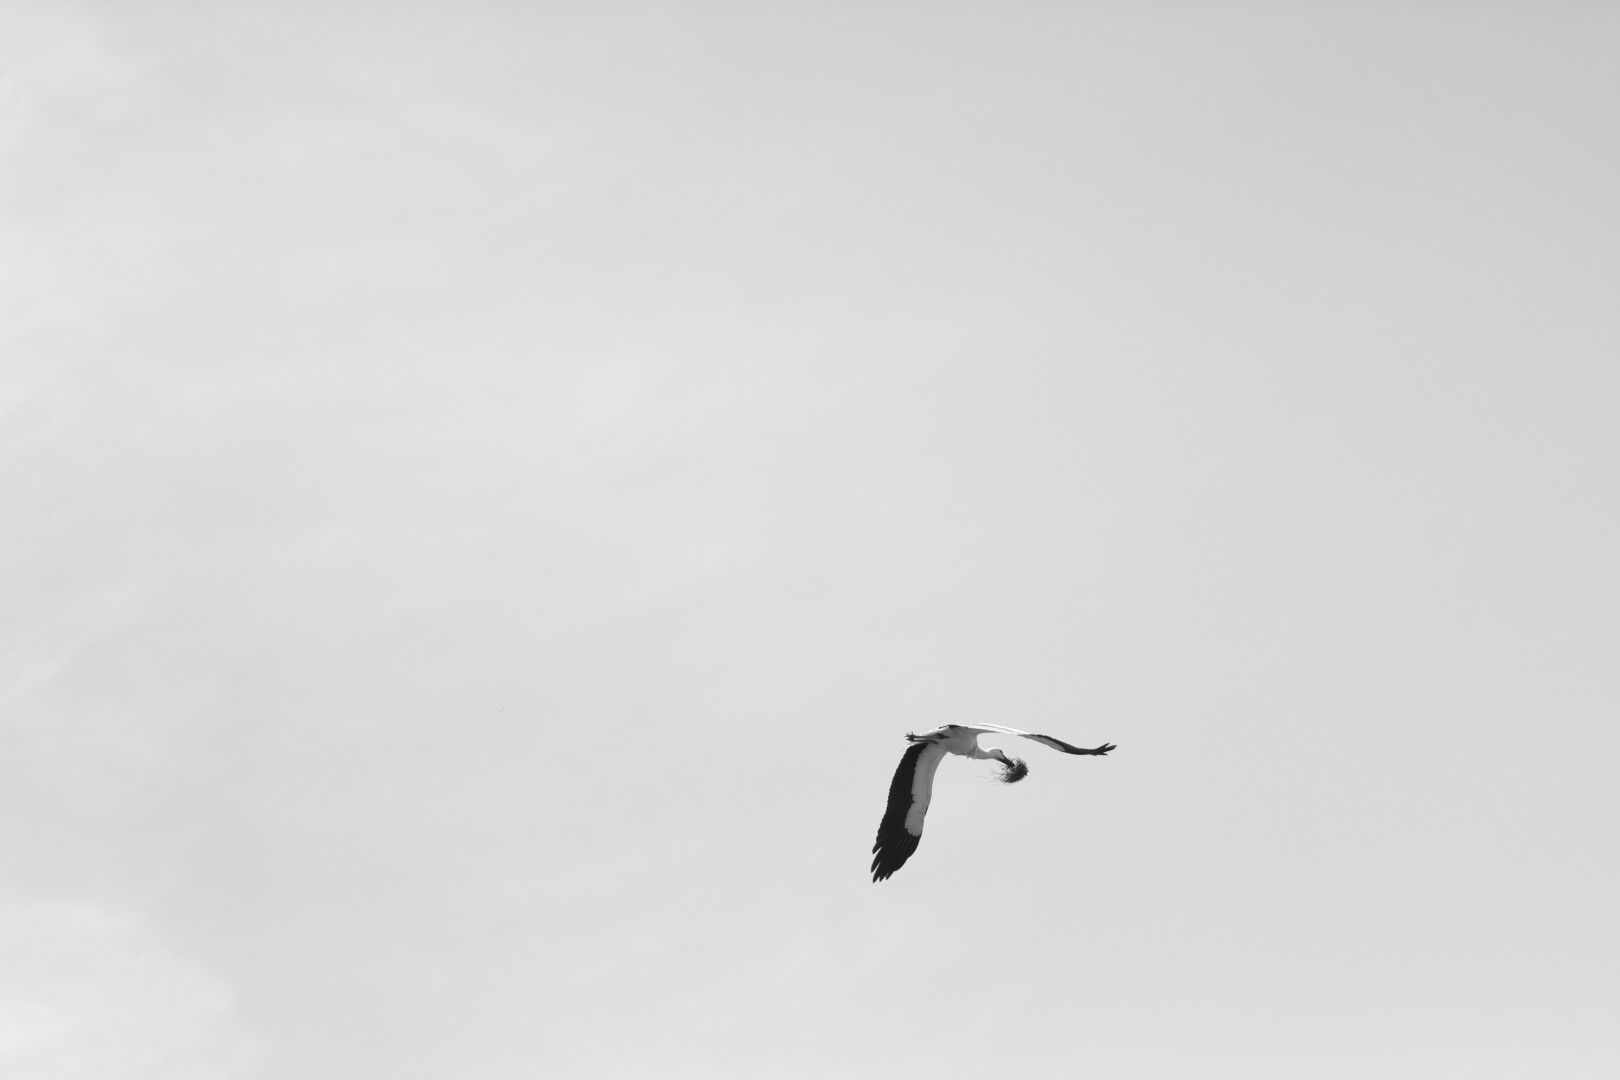 large bird in flight